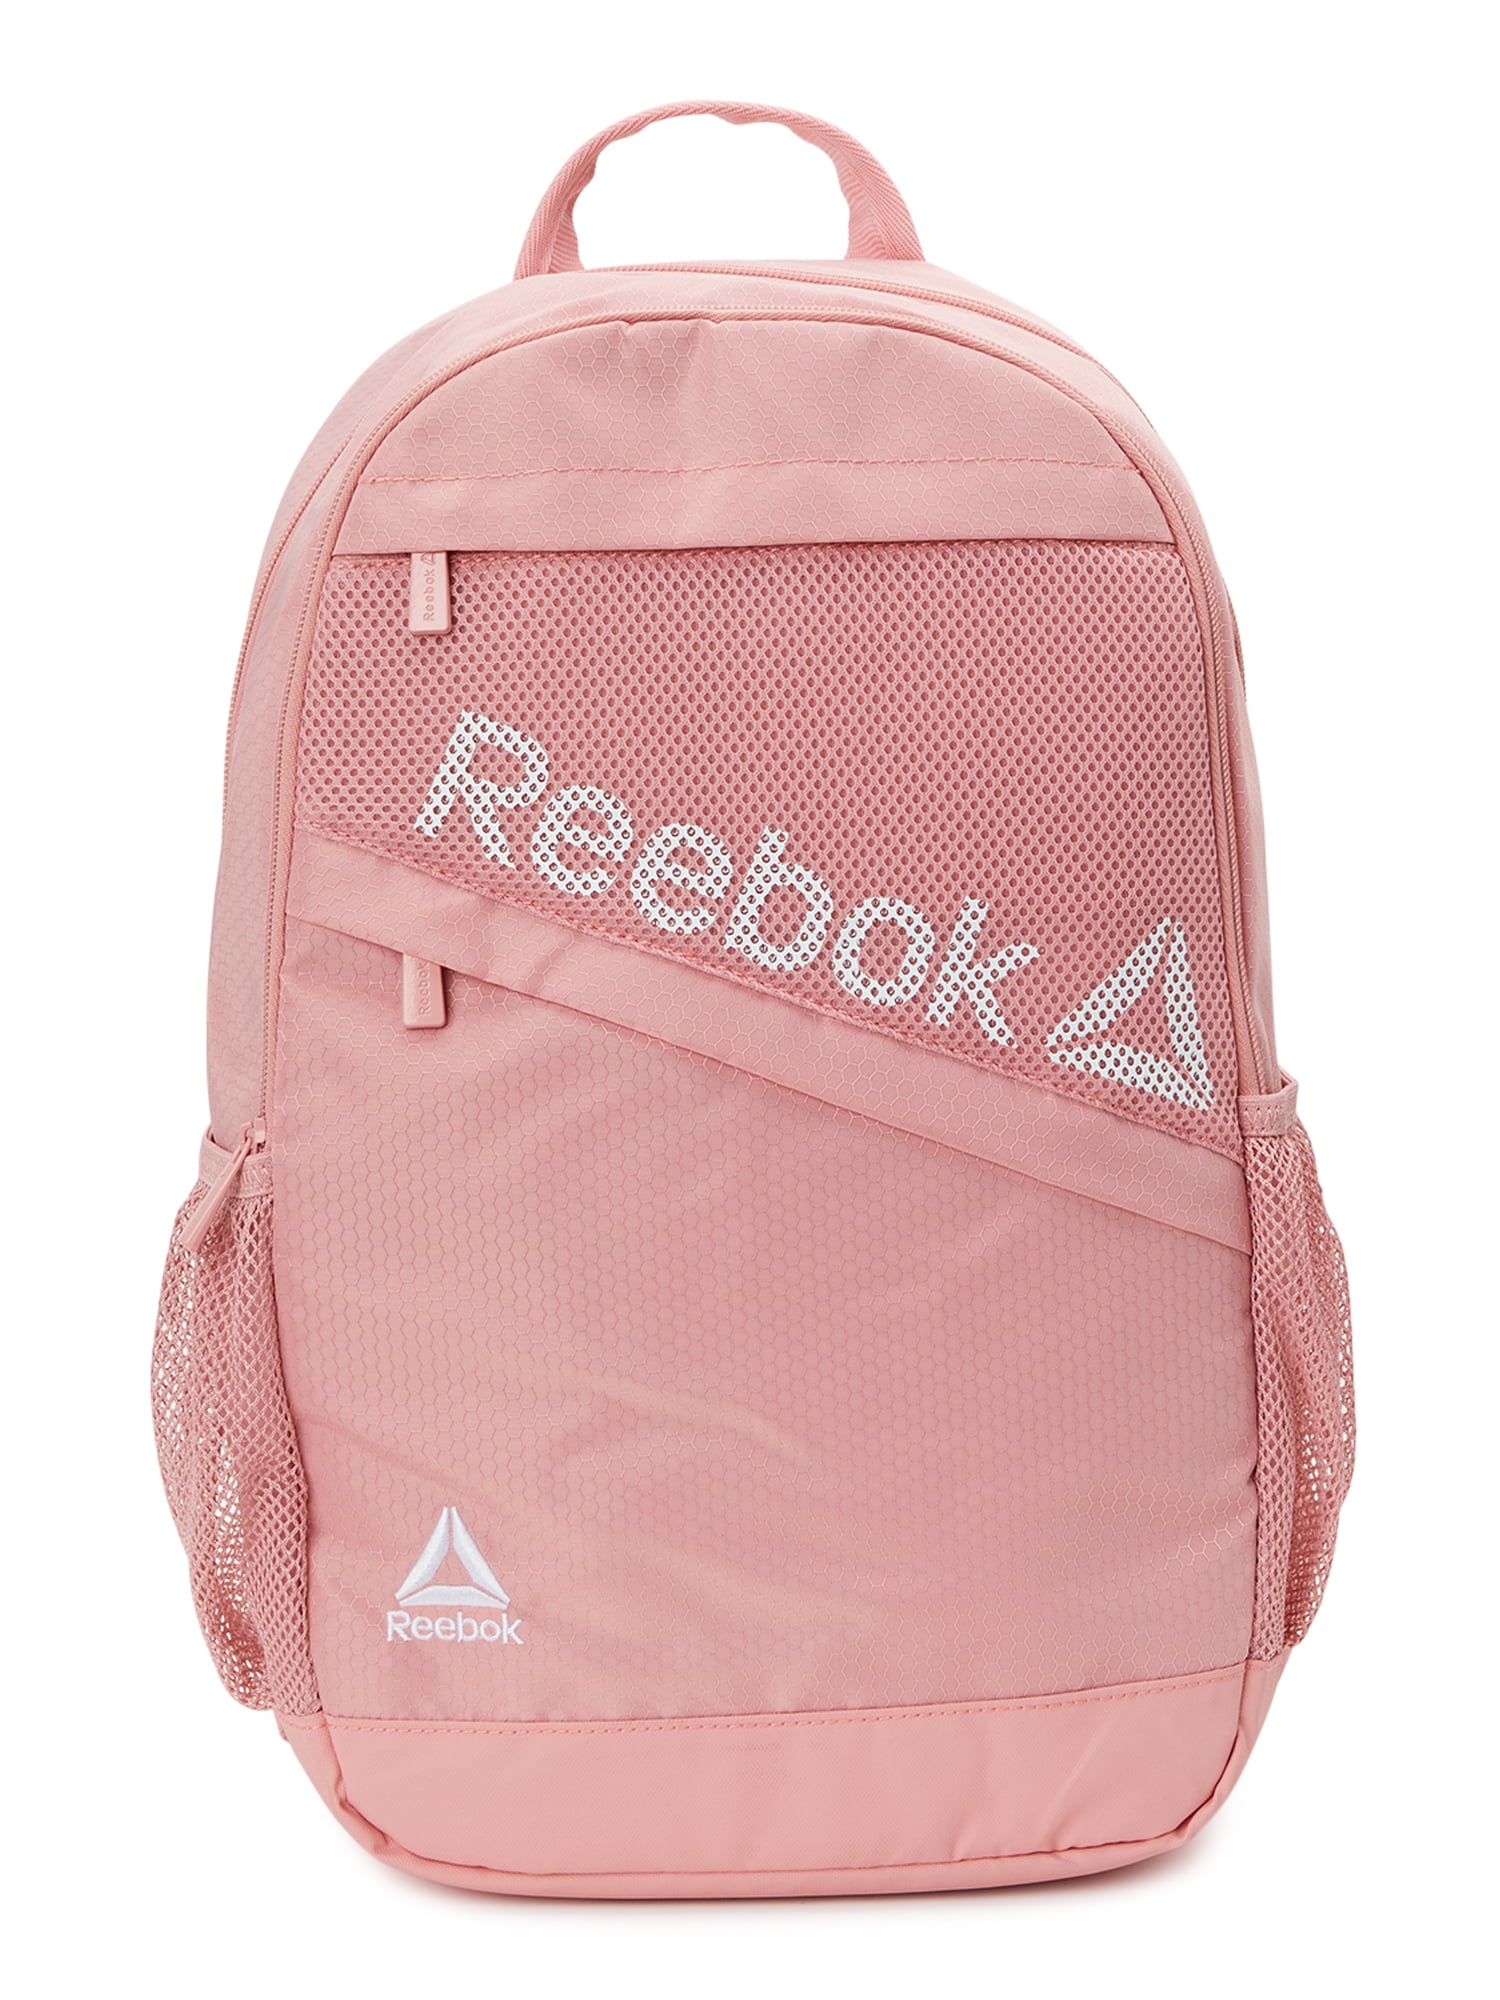 Reebok Women's Adult Isla Backpack, Rose Pink